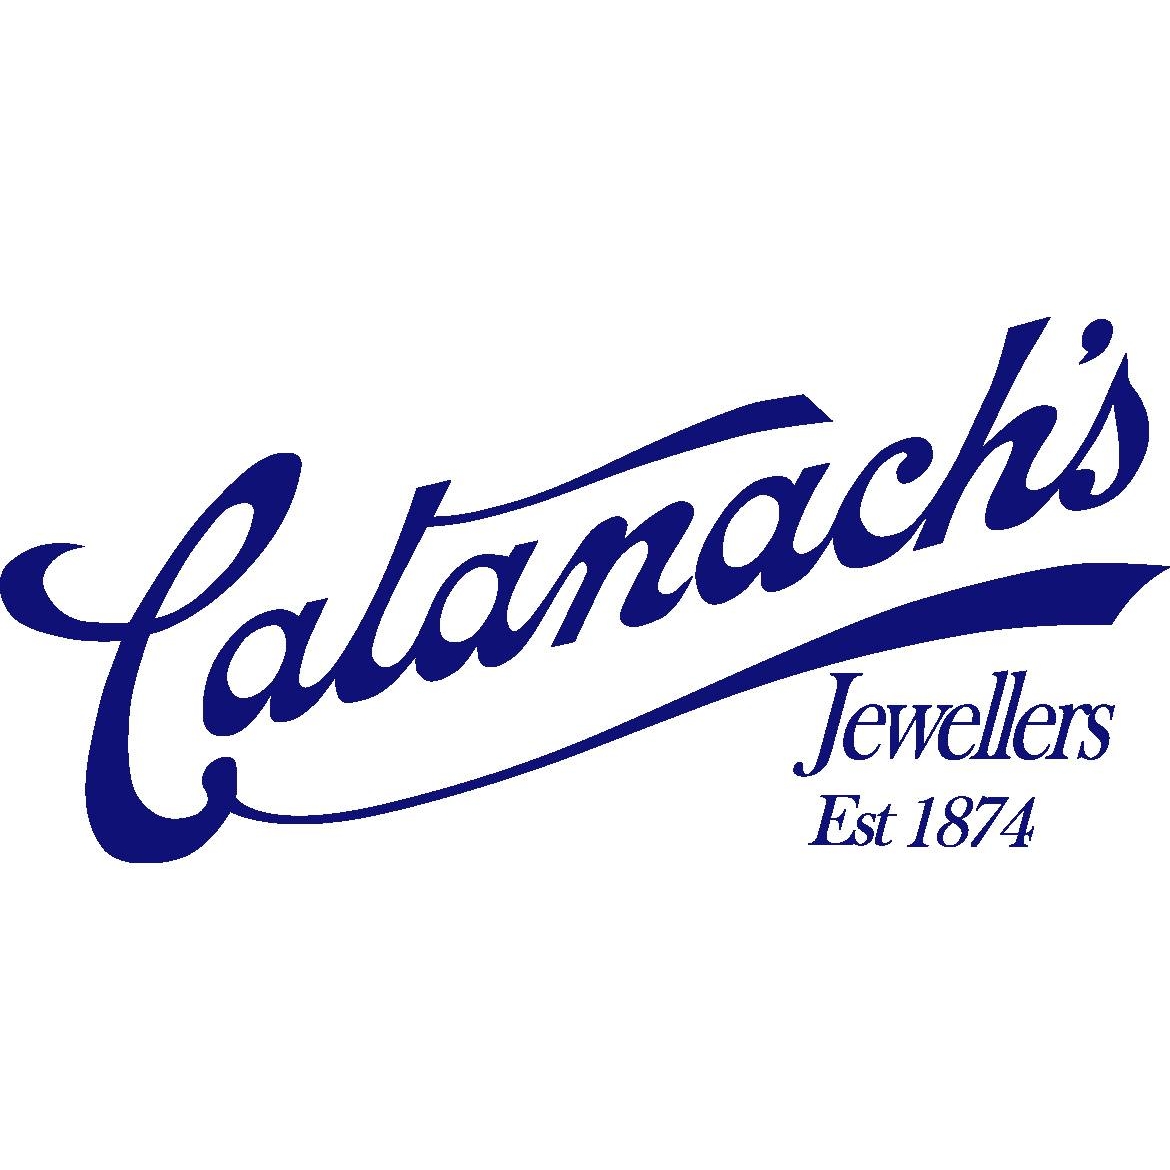 Company logo of Catanach's Jewellers